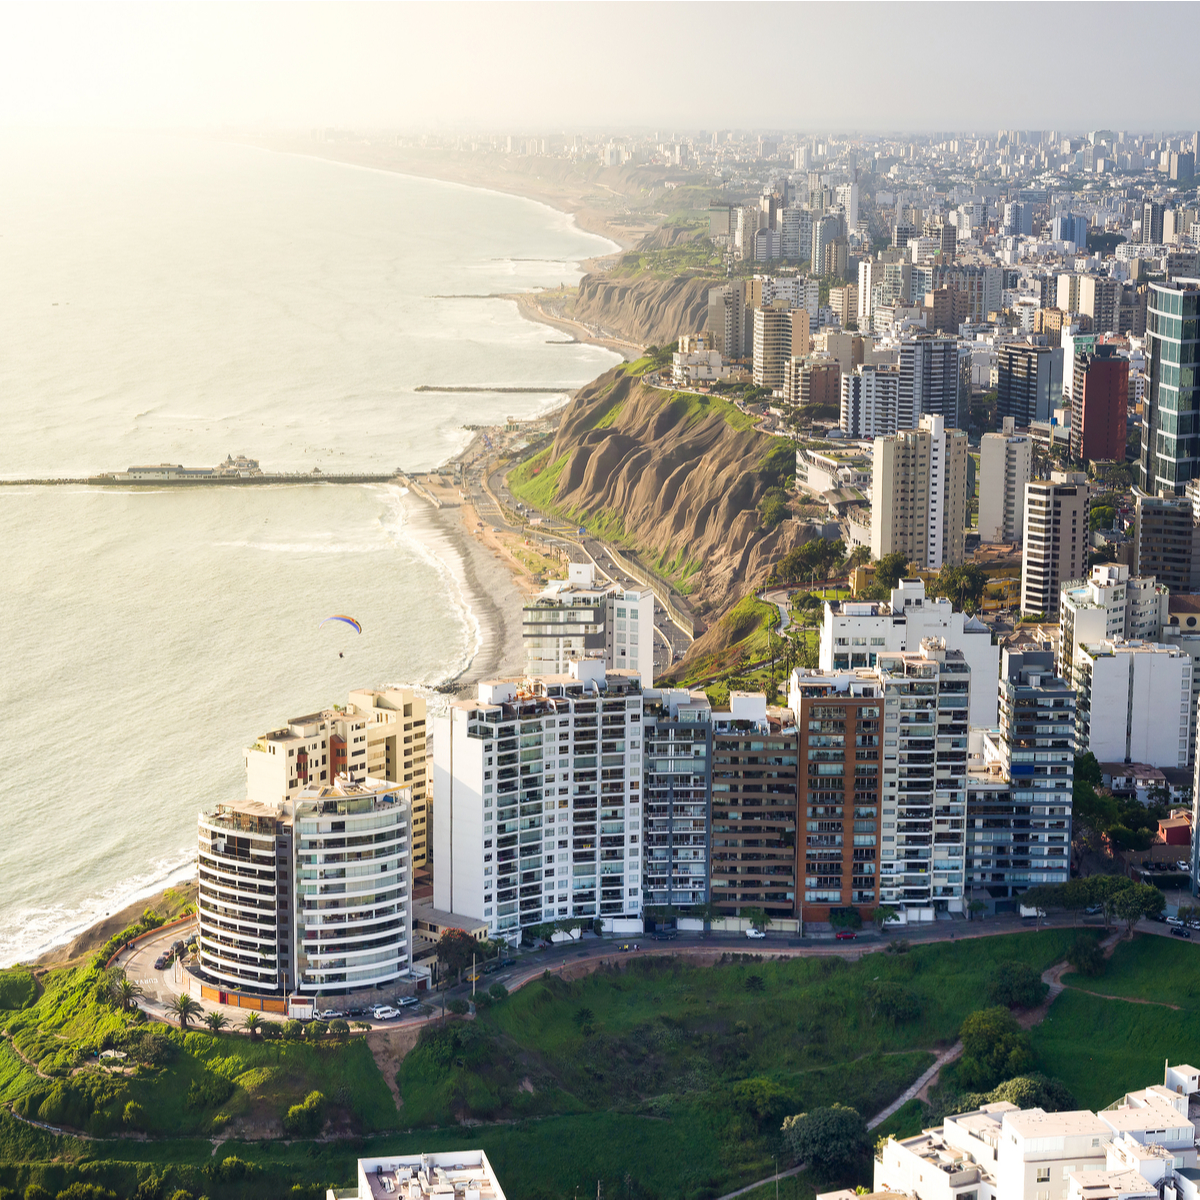 Aerial view of Miraflores coastal town in Lima, peru.